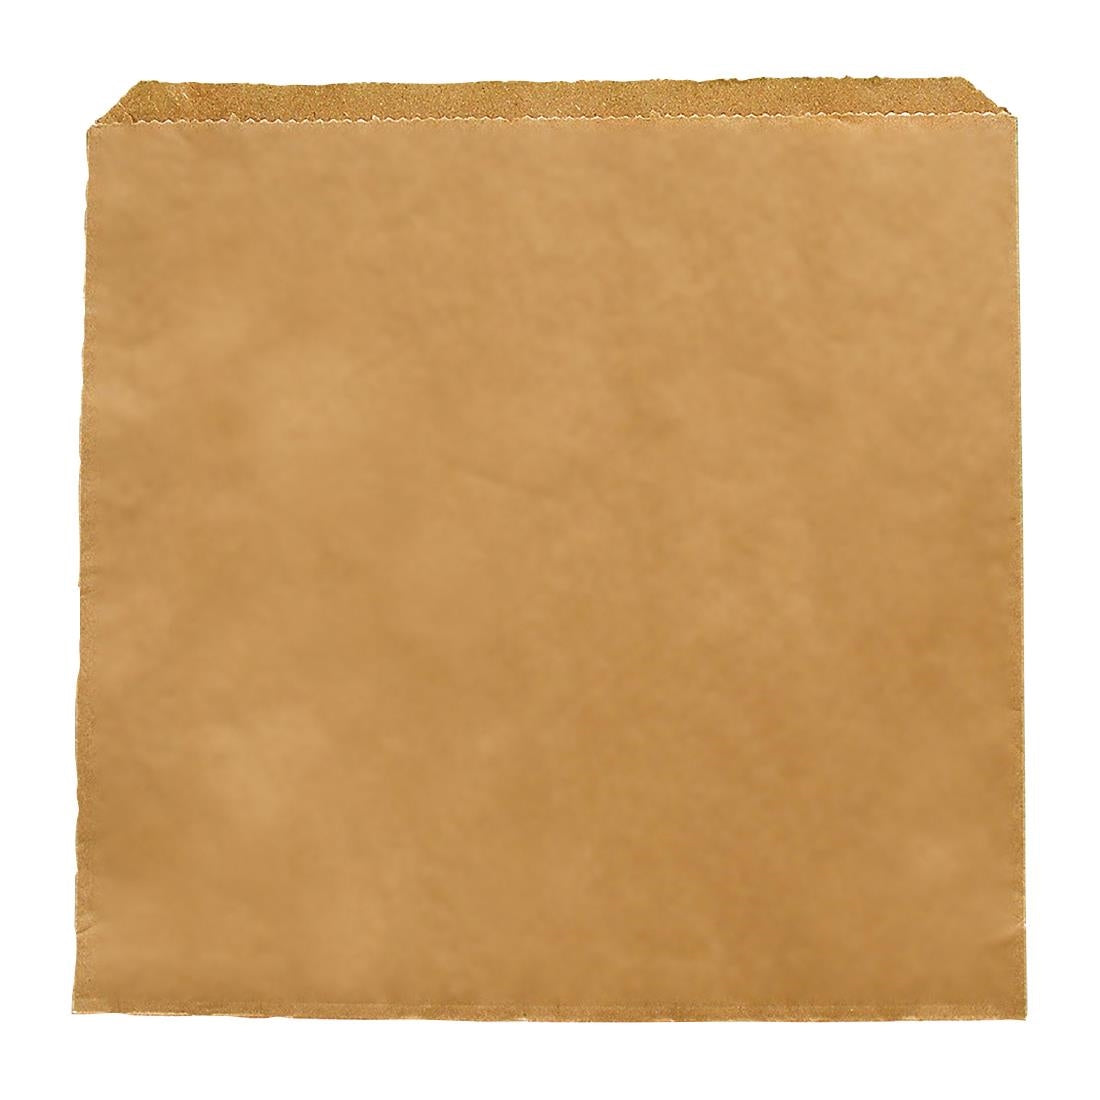 DX575 Vegware Compostable Paper Sandwich Bags Kraft - 7x7" (Pack of 1000)